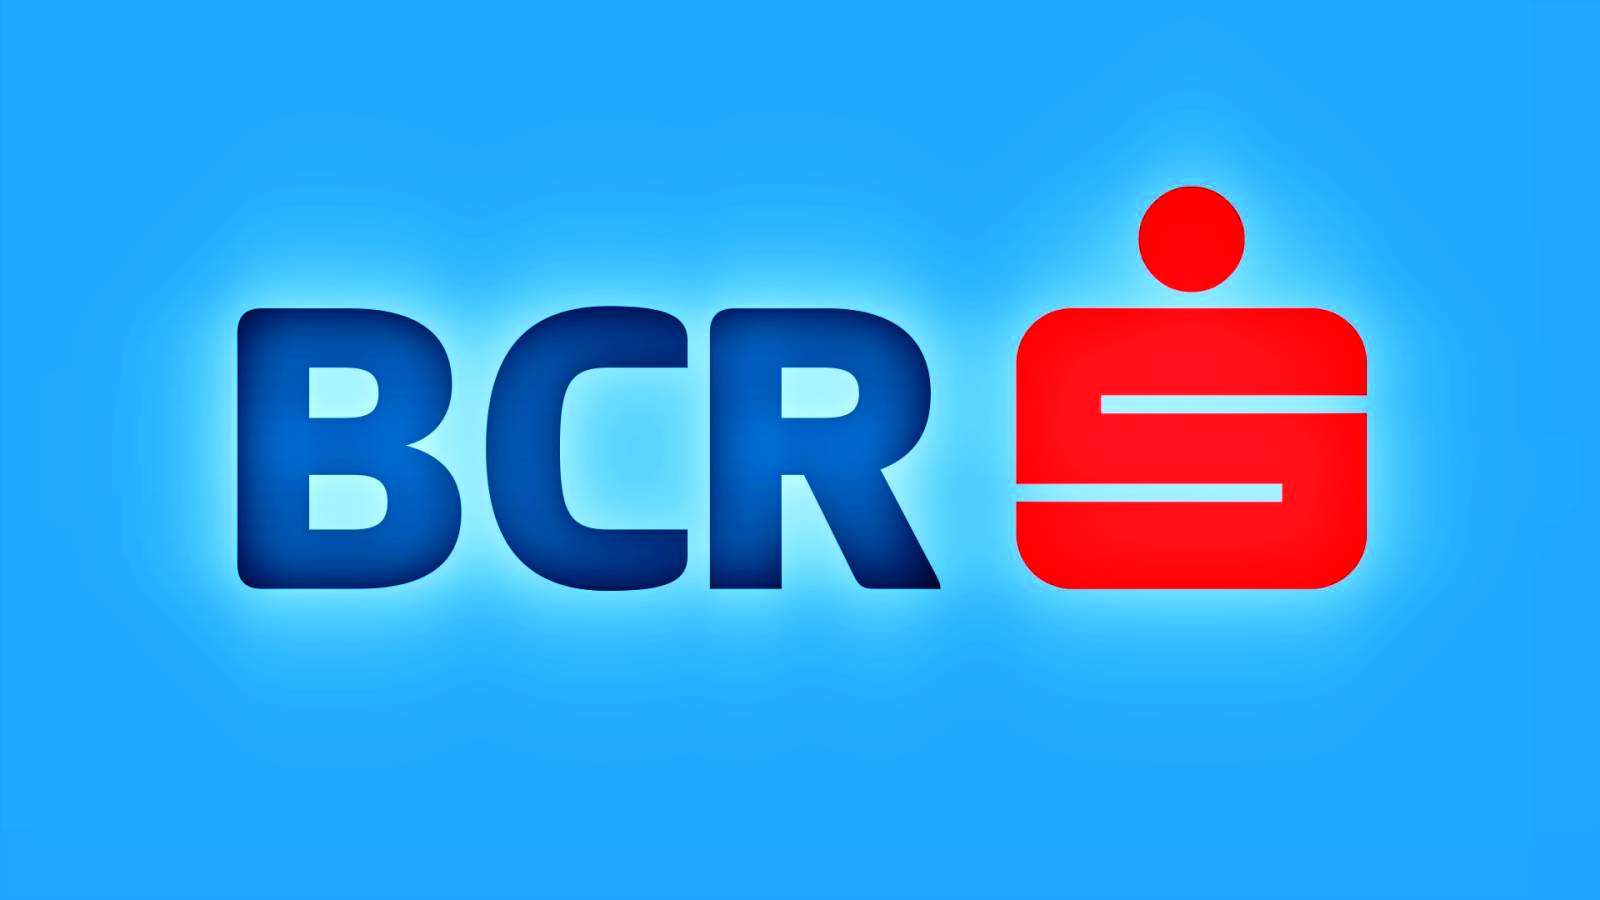 BCR Romanian loma